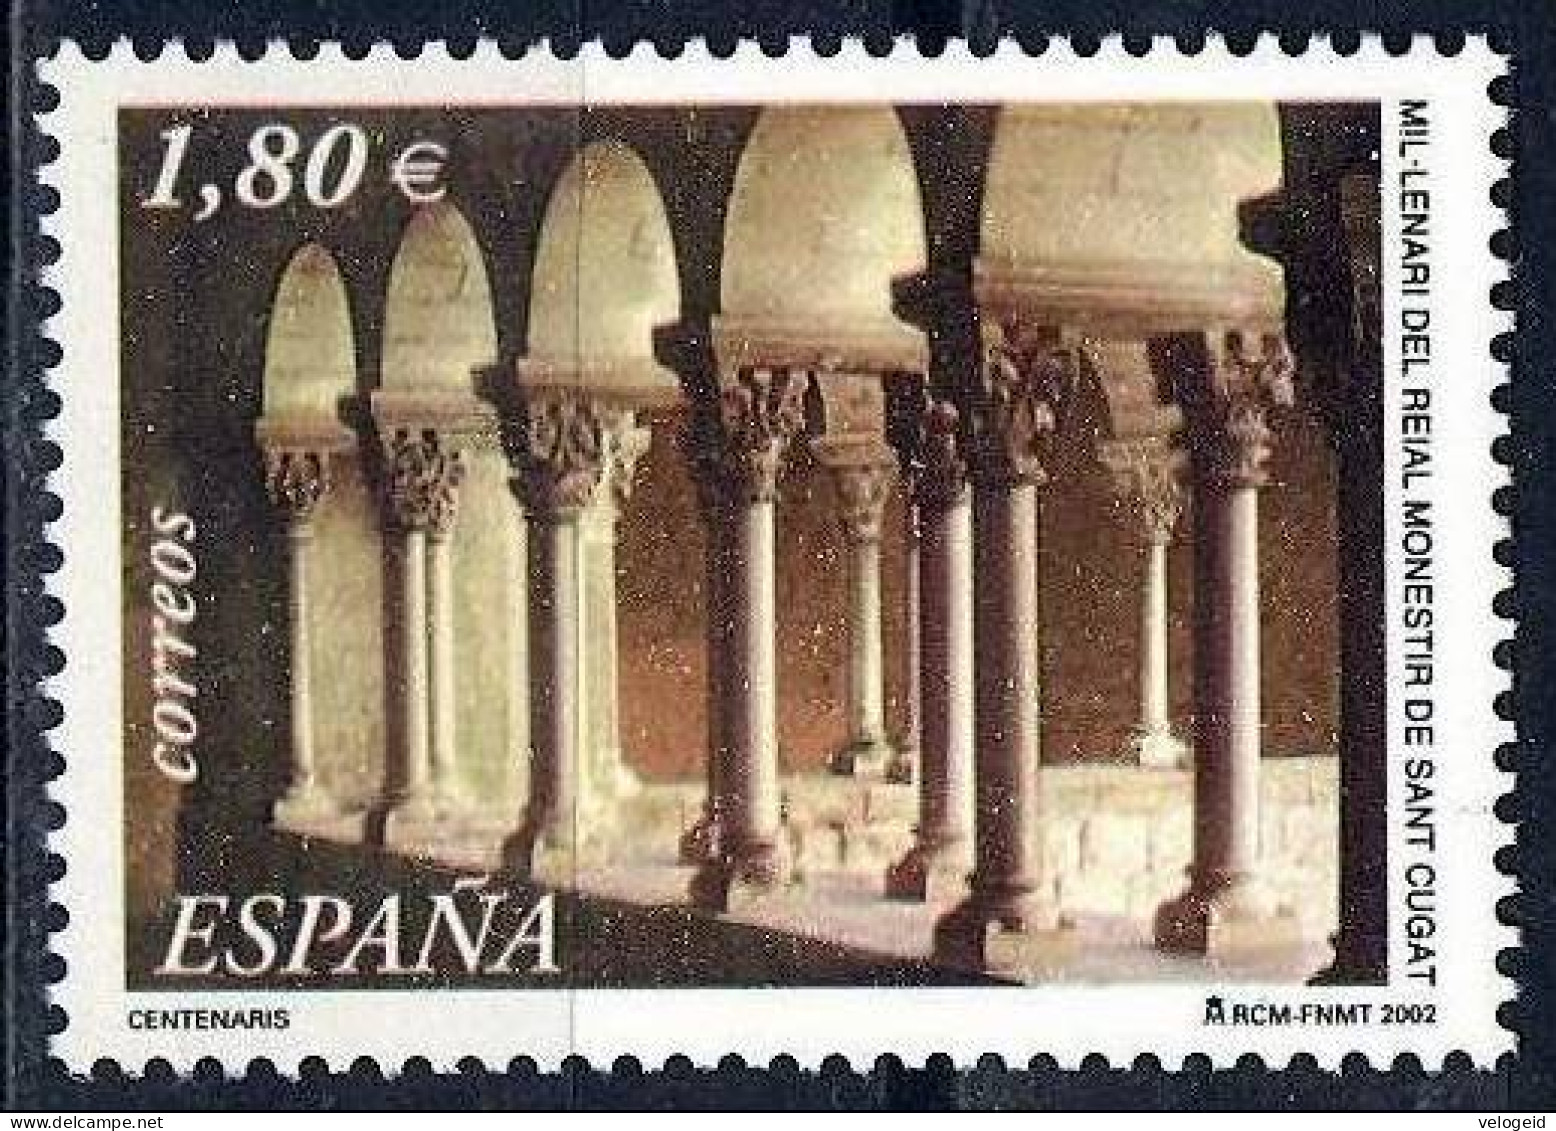 España. Spain. 2002. Monasterio De San Cugat. Claustro. Cloister. Monastery - Abbeys & Monasteries